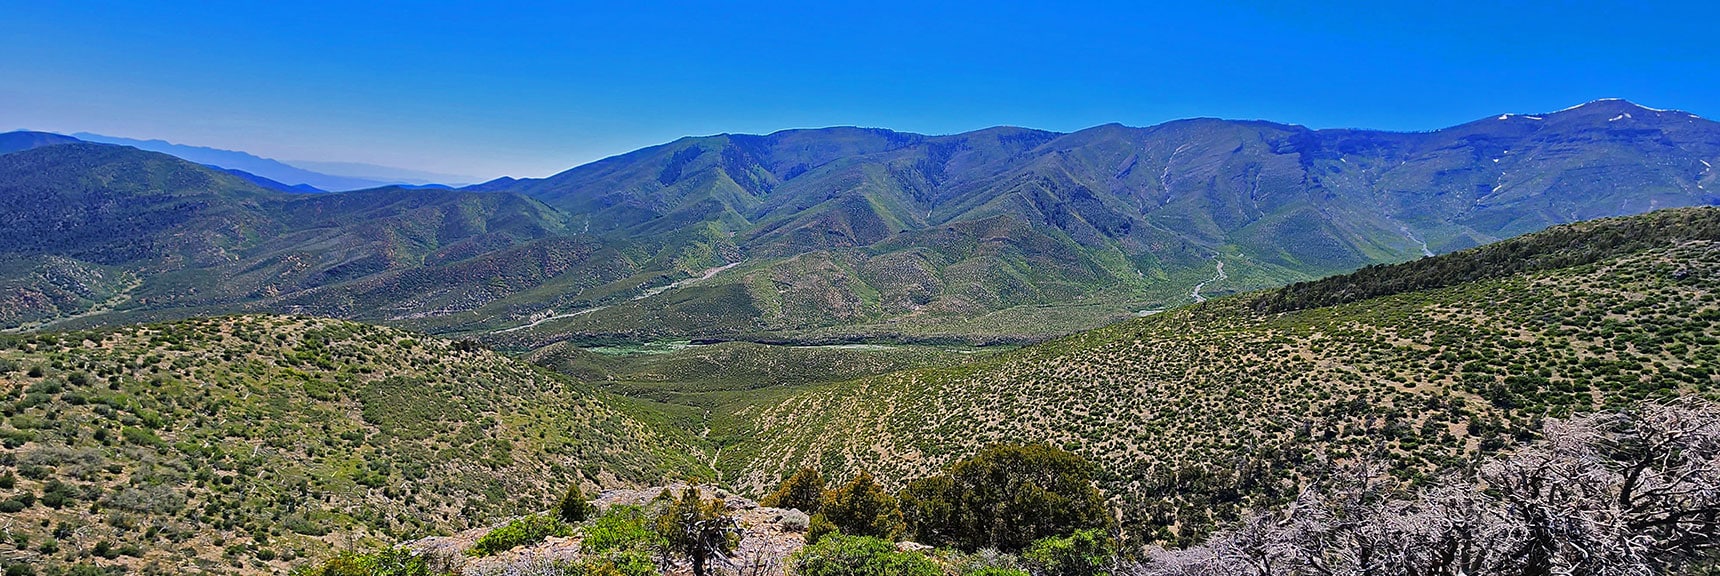 North Descent Ridge Meets Lovell Canyon Base, Possibly Just North of Handy Peak | Wilson Ridge Lovell Canyon Loop | Lovell Canyon, Nevada